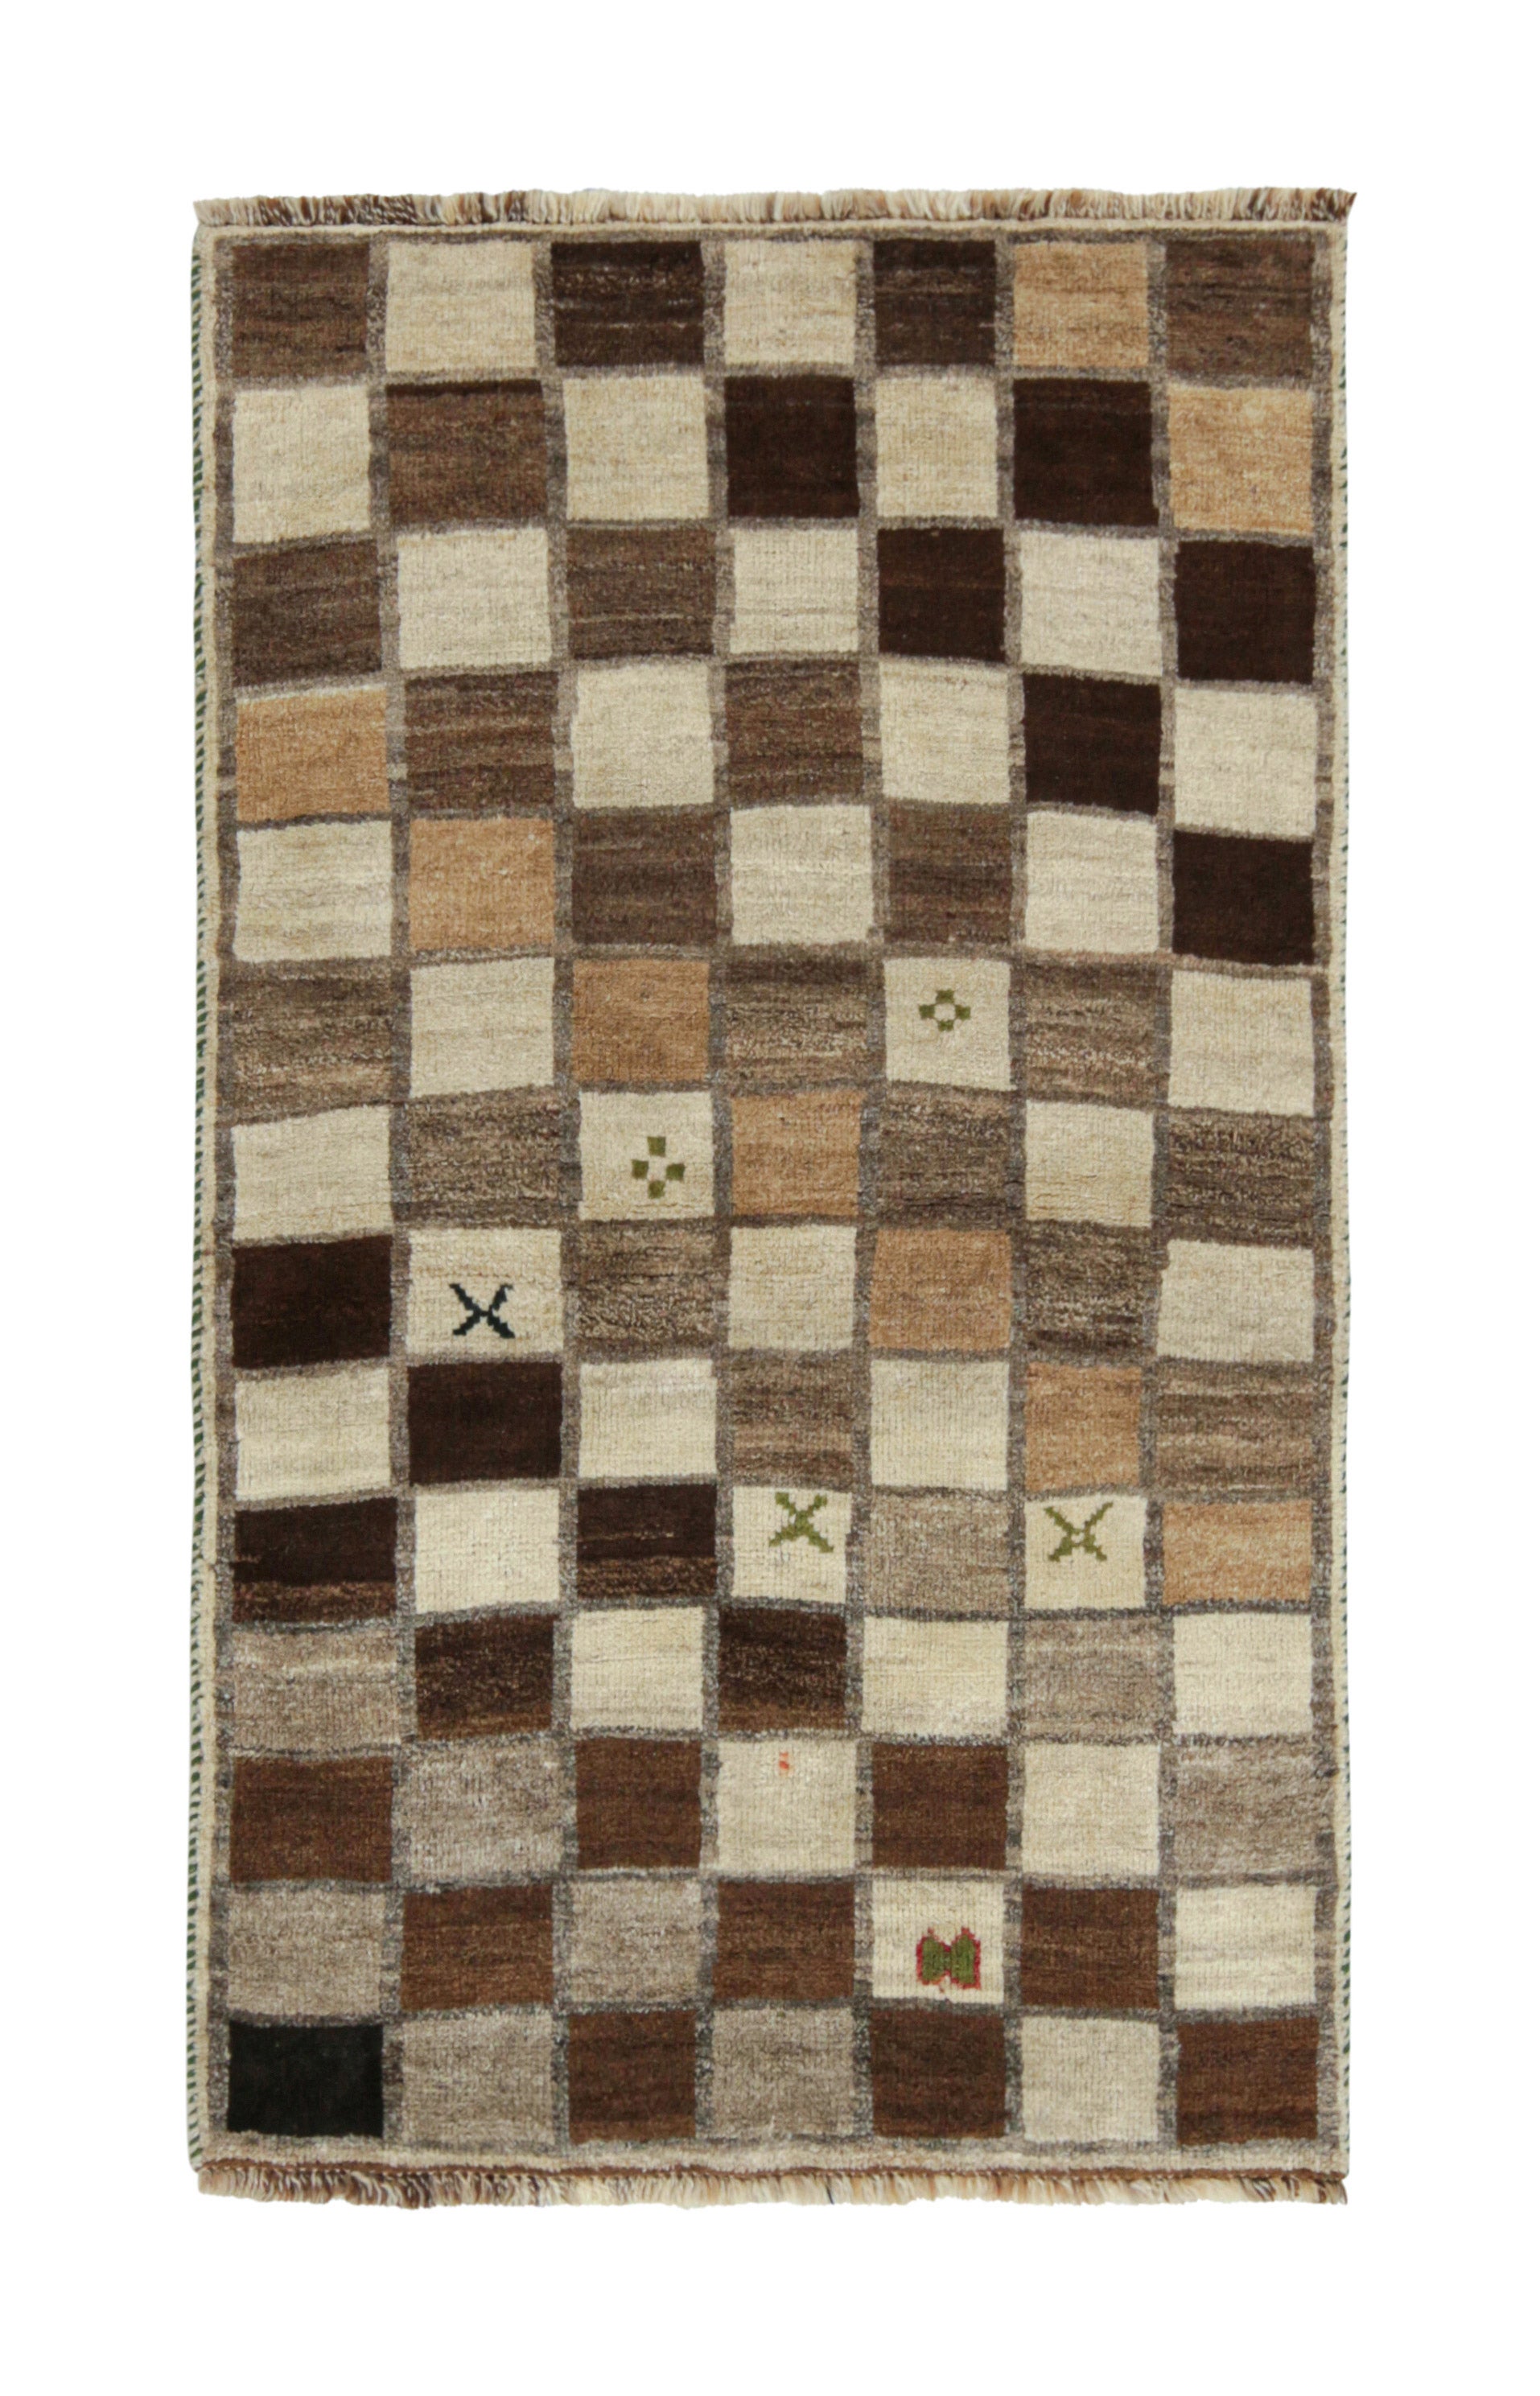 Vintage Gabbeh Tribal Rug in Beige-Brown and Gray Square Patterns by Rug & Kilim